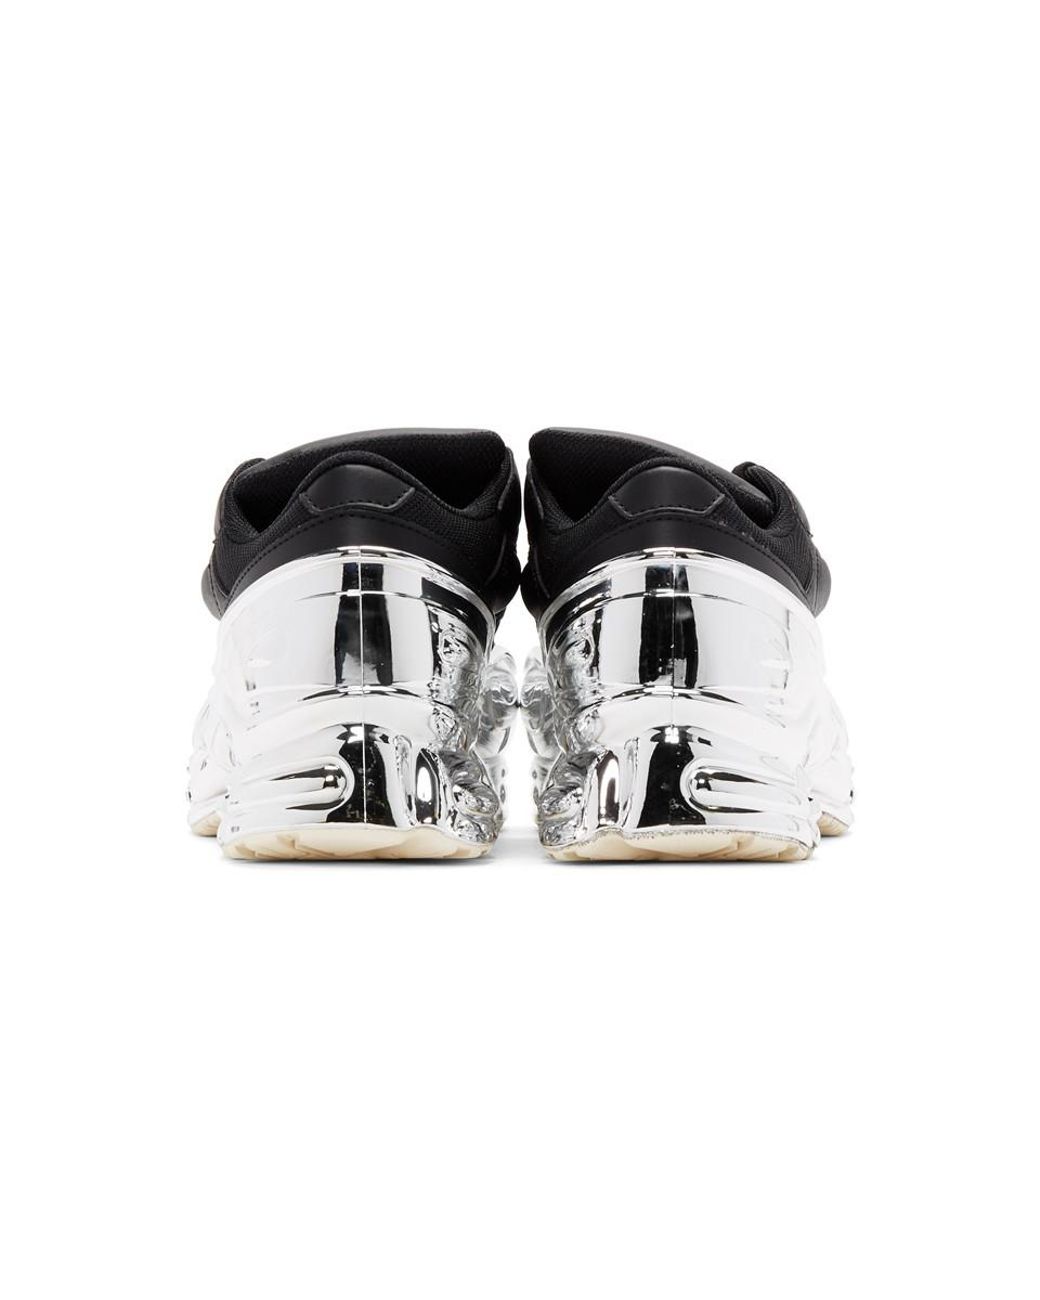 Raf Simons Leather Ozweego Platform Wedge Sneakers in Black Silver (Black)  for Men | Lyst